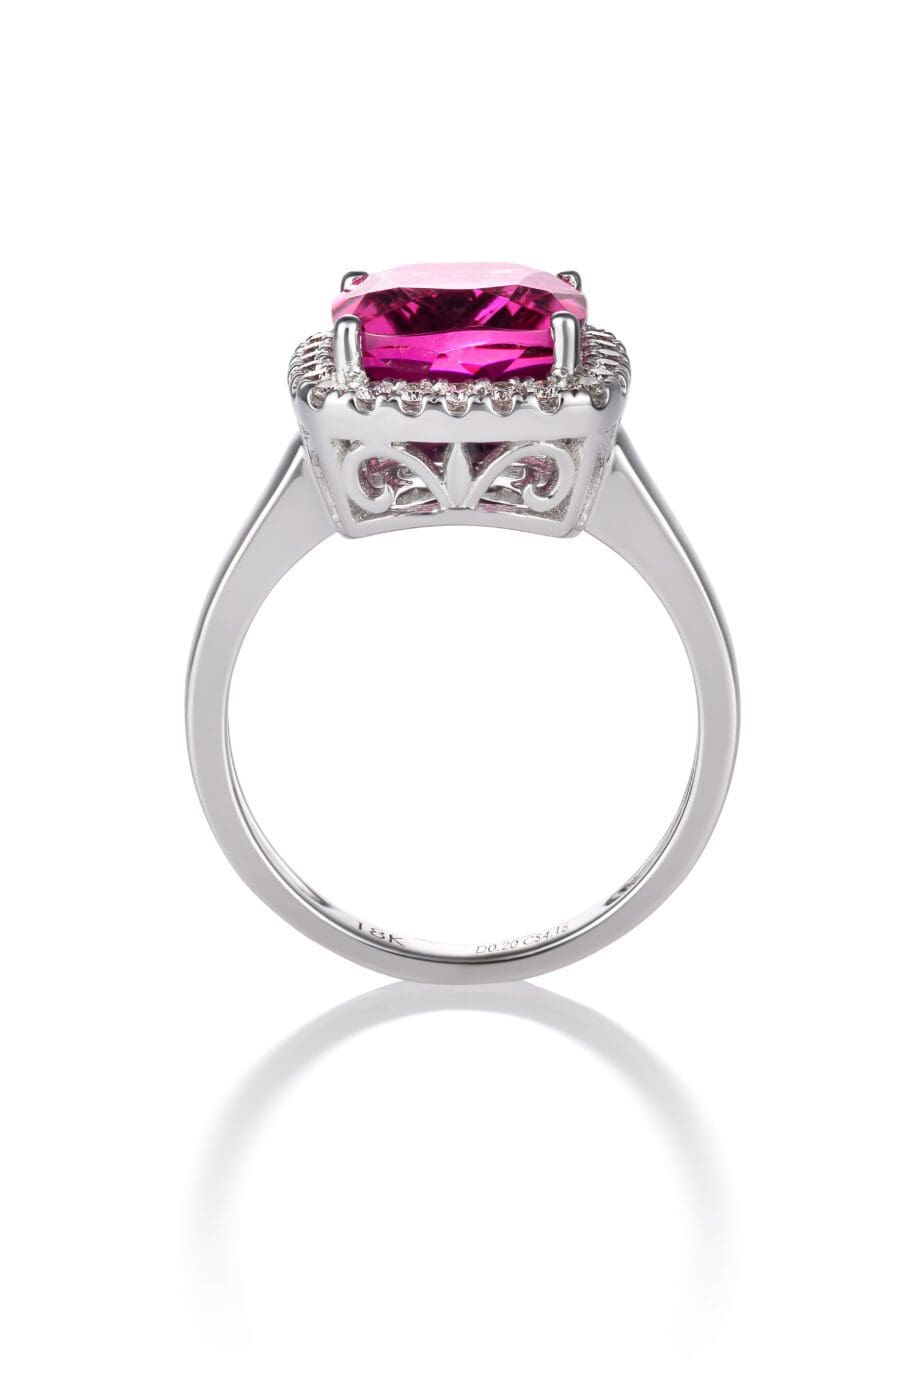 Bright Pink Tourmaline and Diamond Ring WG Tourm Halo Ring